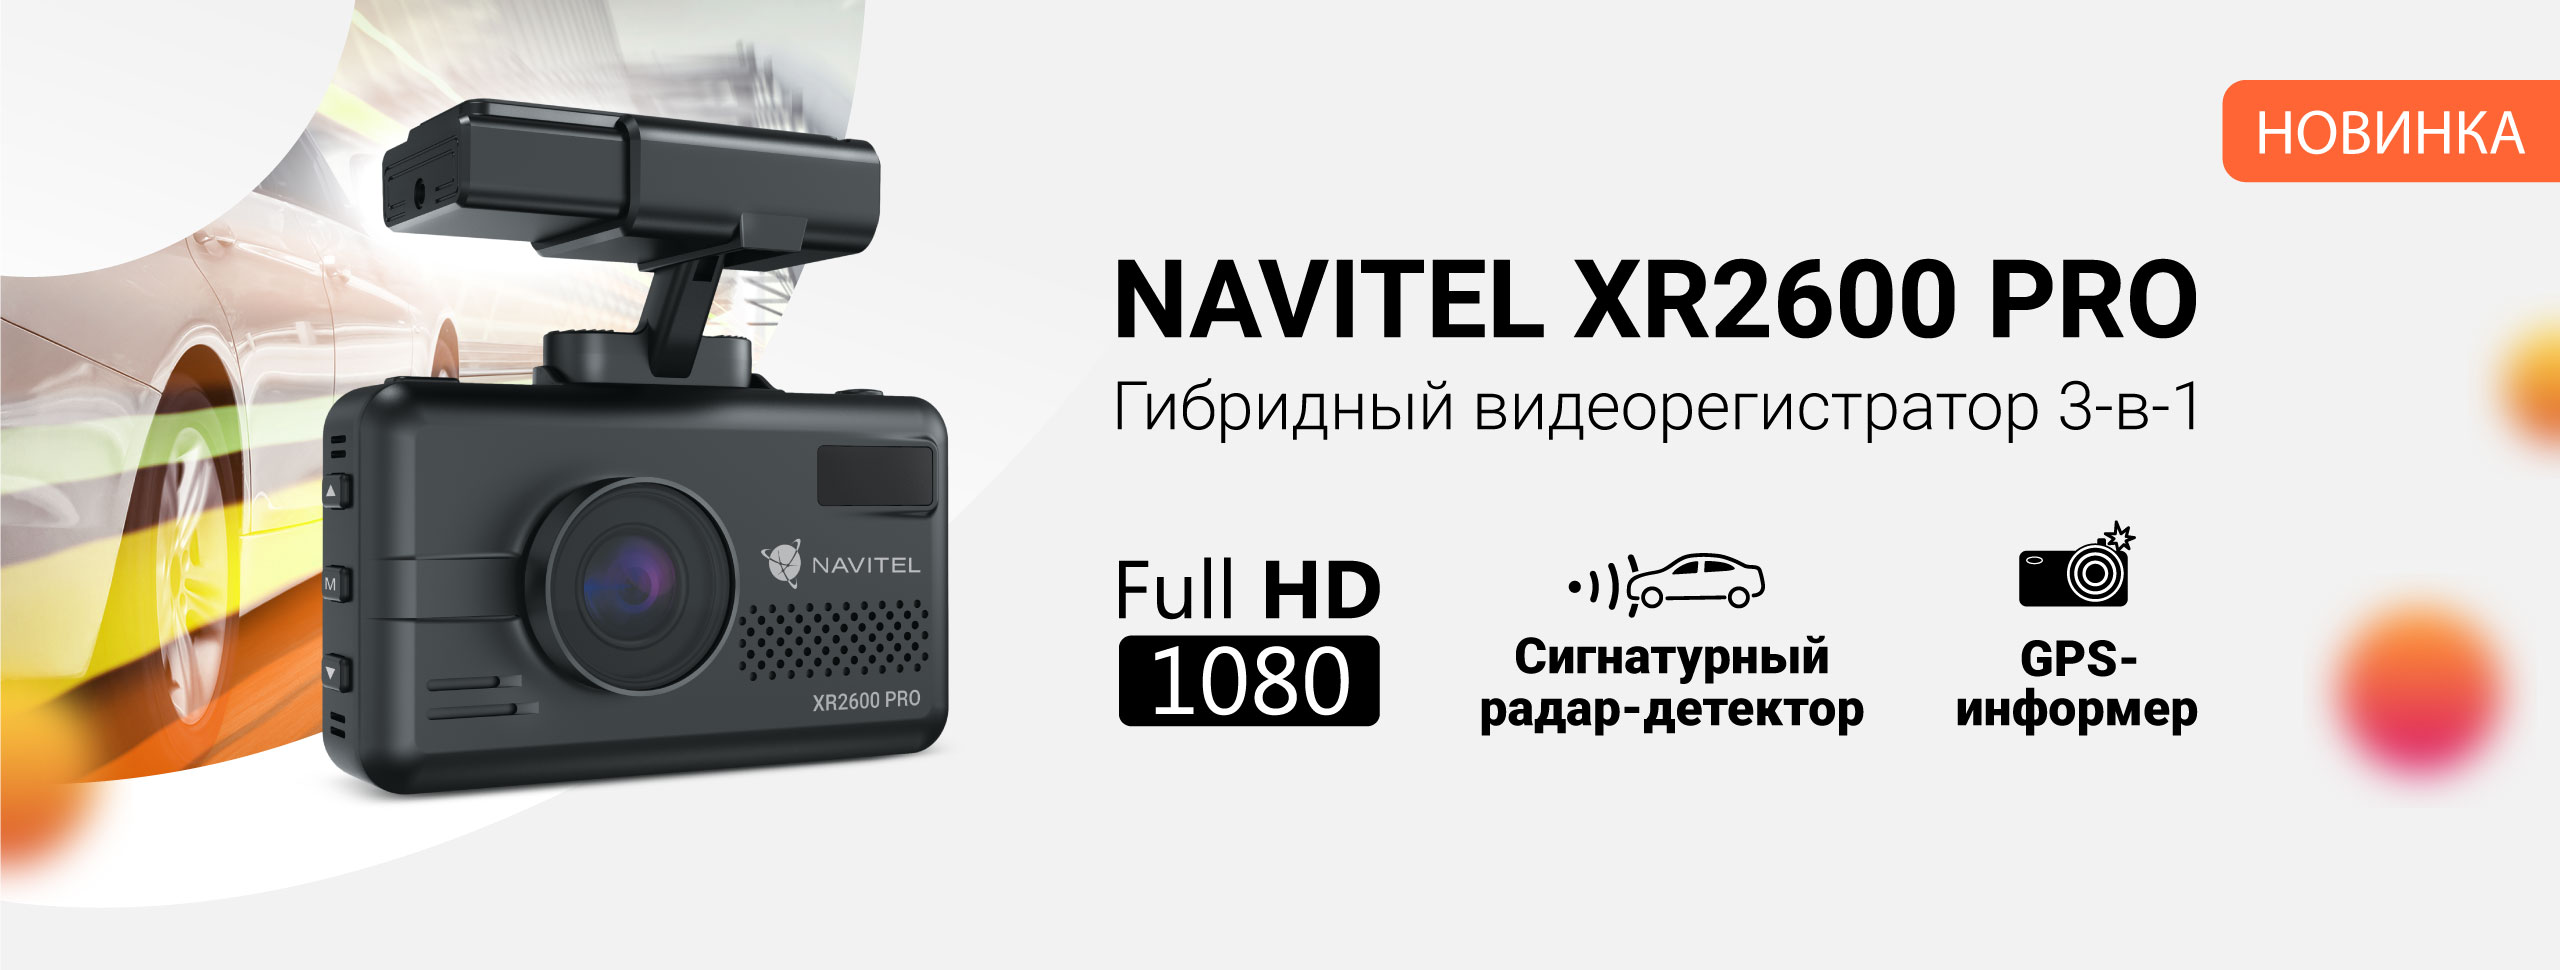 Новинка! NAVITEL XR2600 PRO — видеорегистратор с радар-детектором и GPS-информером